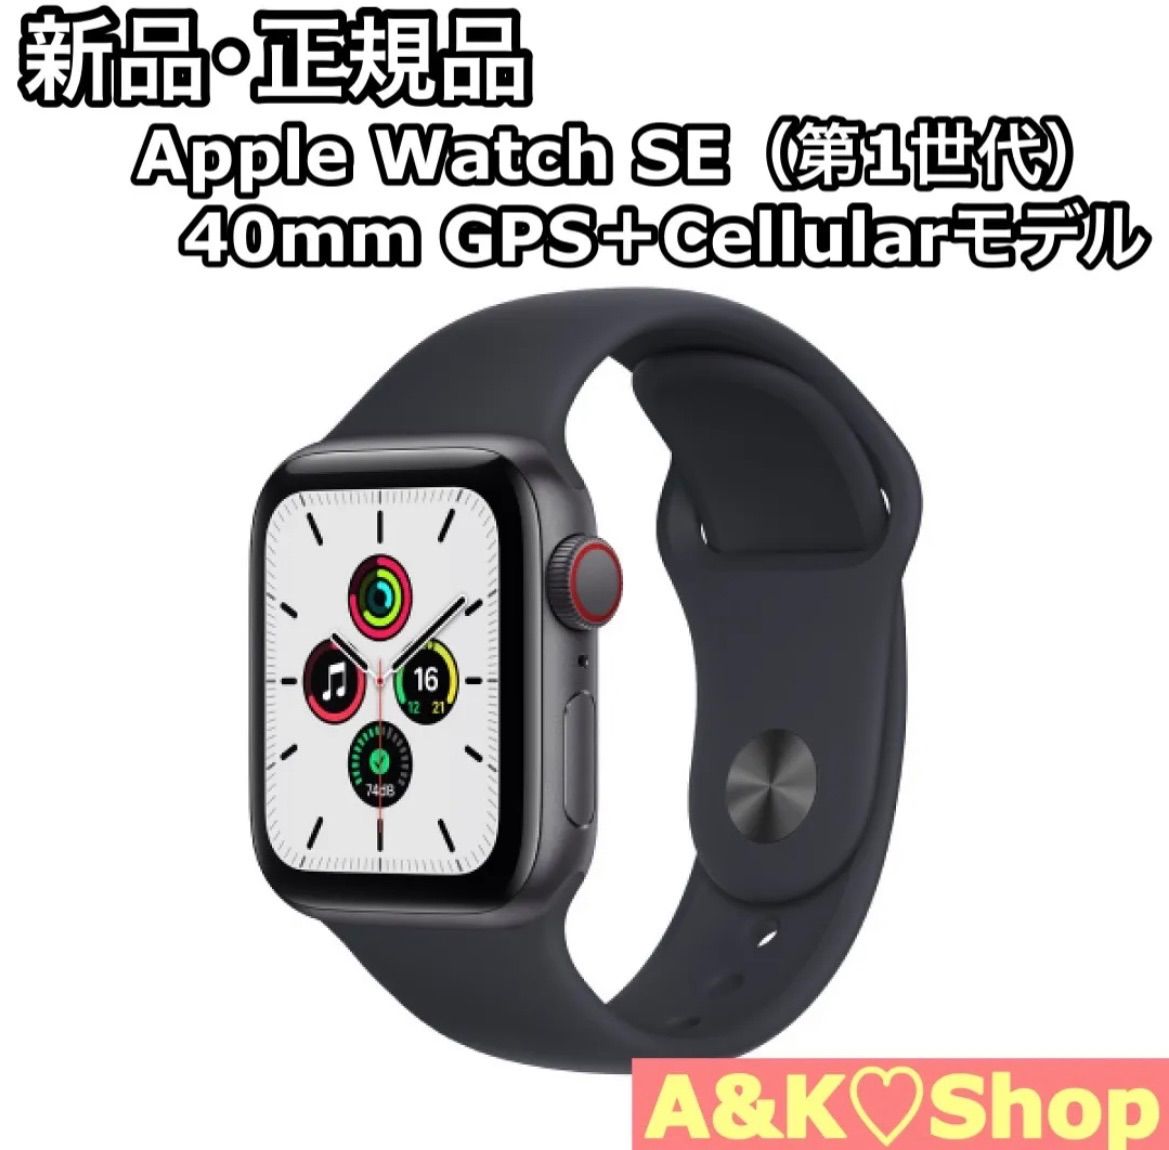 Apple Watch SE 第一世代 GPS+cellular 40mm - その他